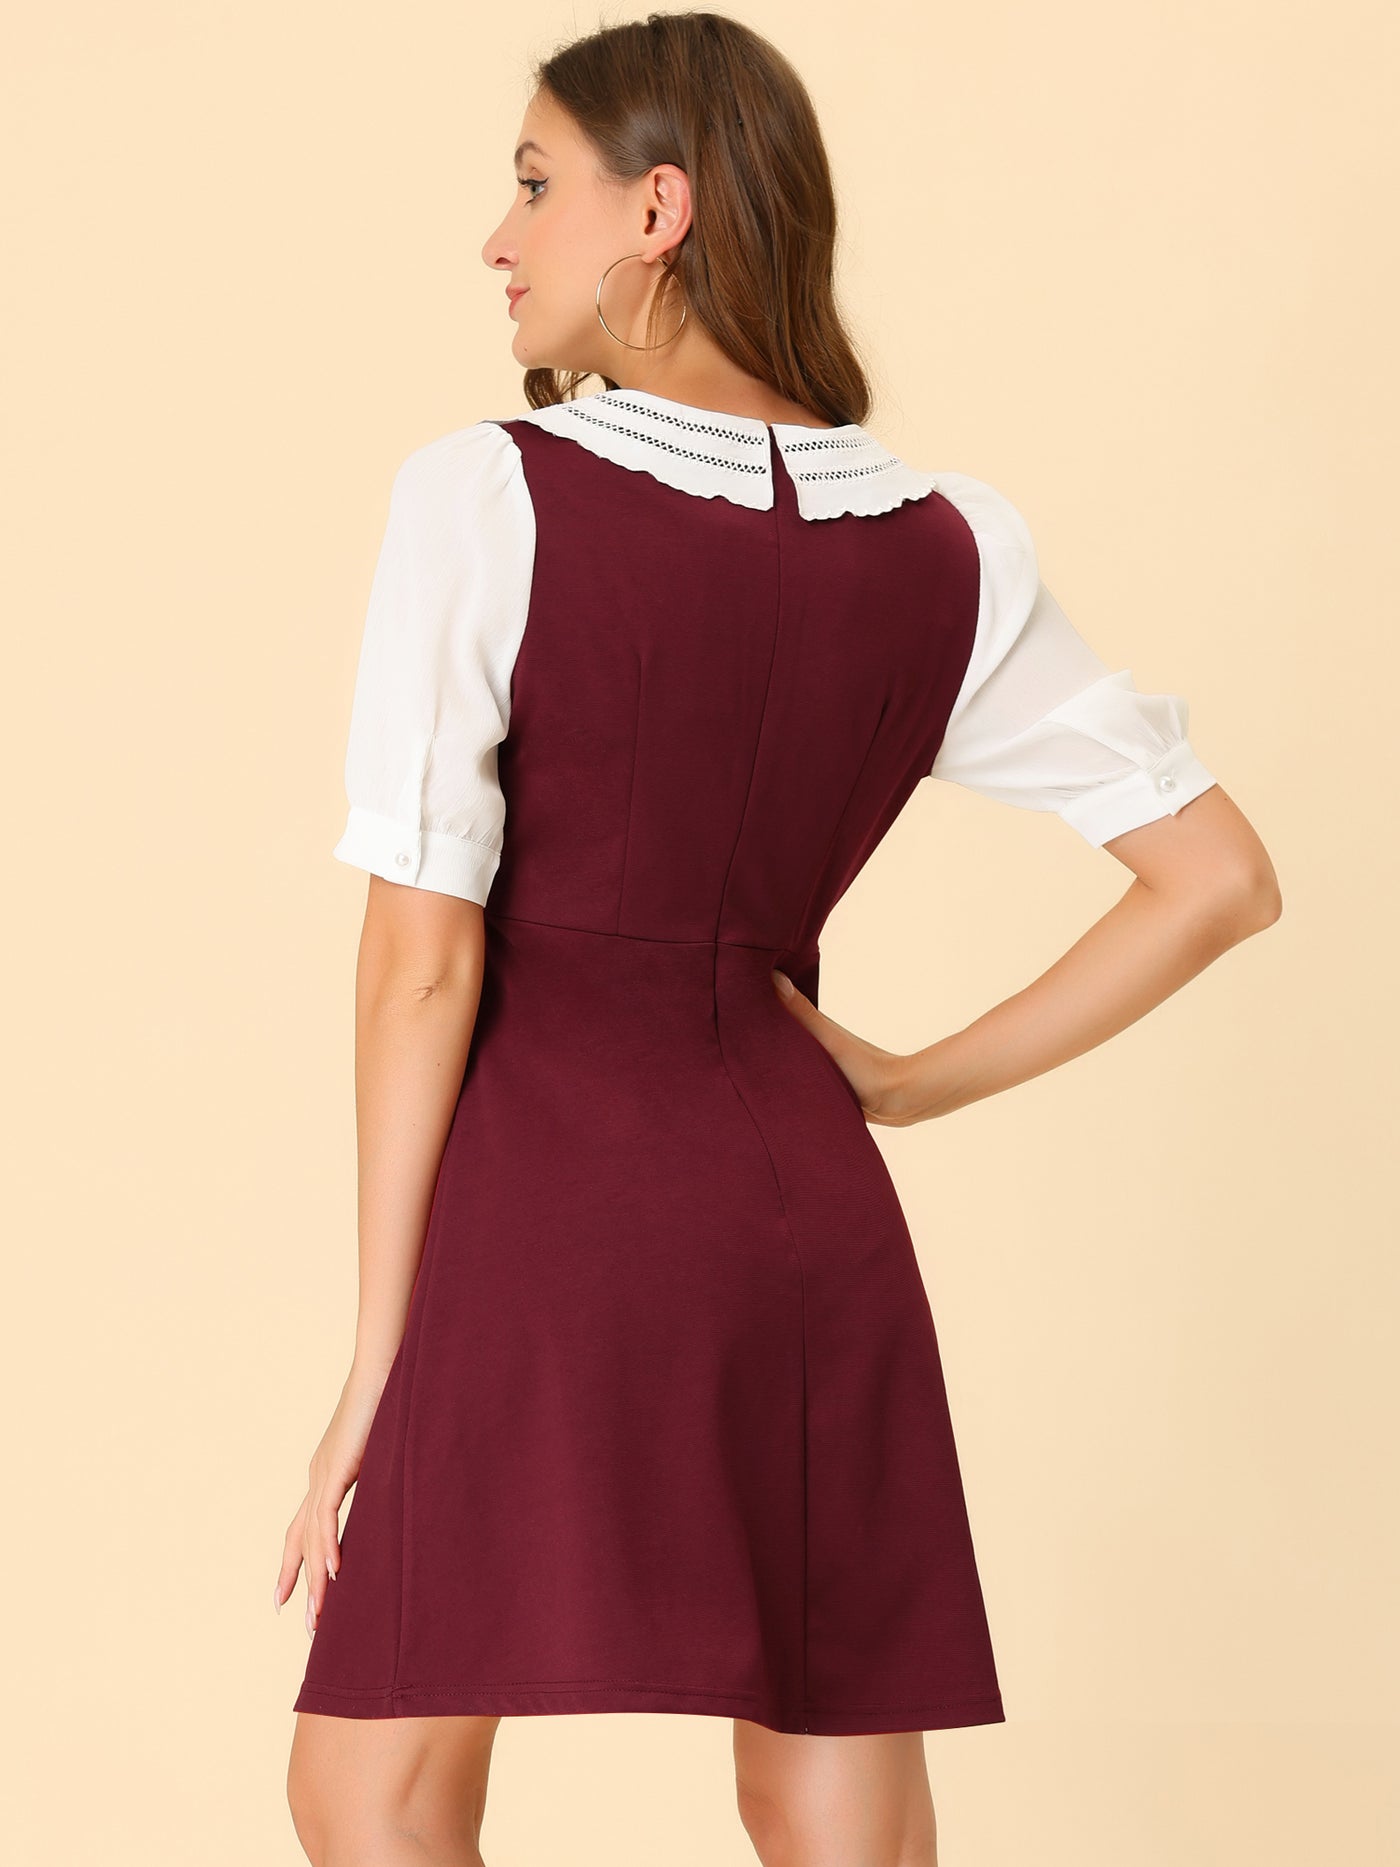 Allegra K Vintage Short Sleeve Button Decor Halloween Contrast Collar Dress